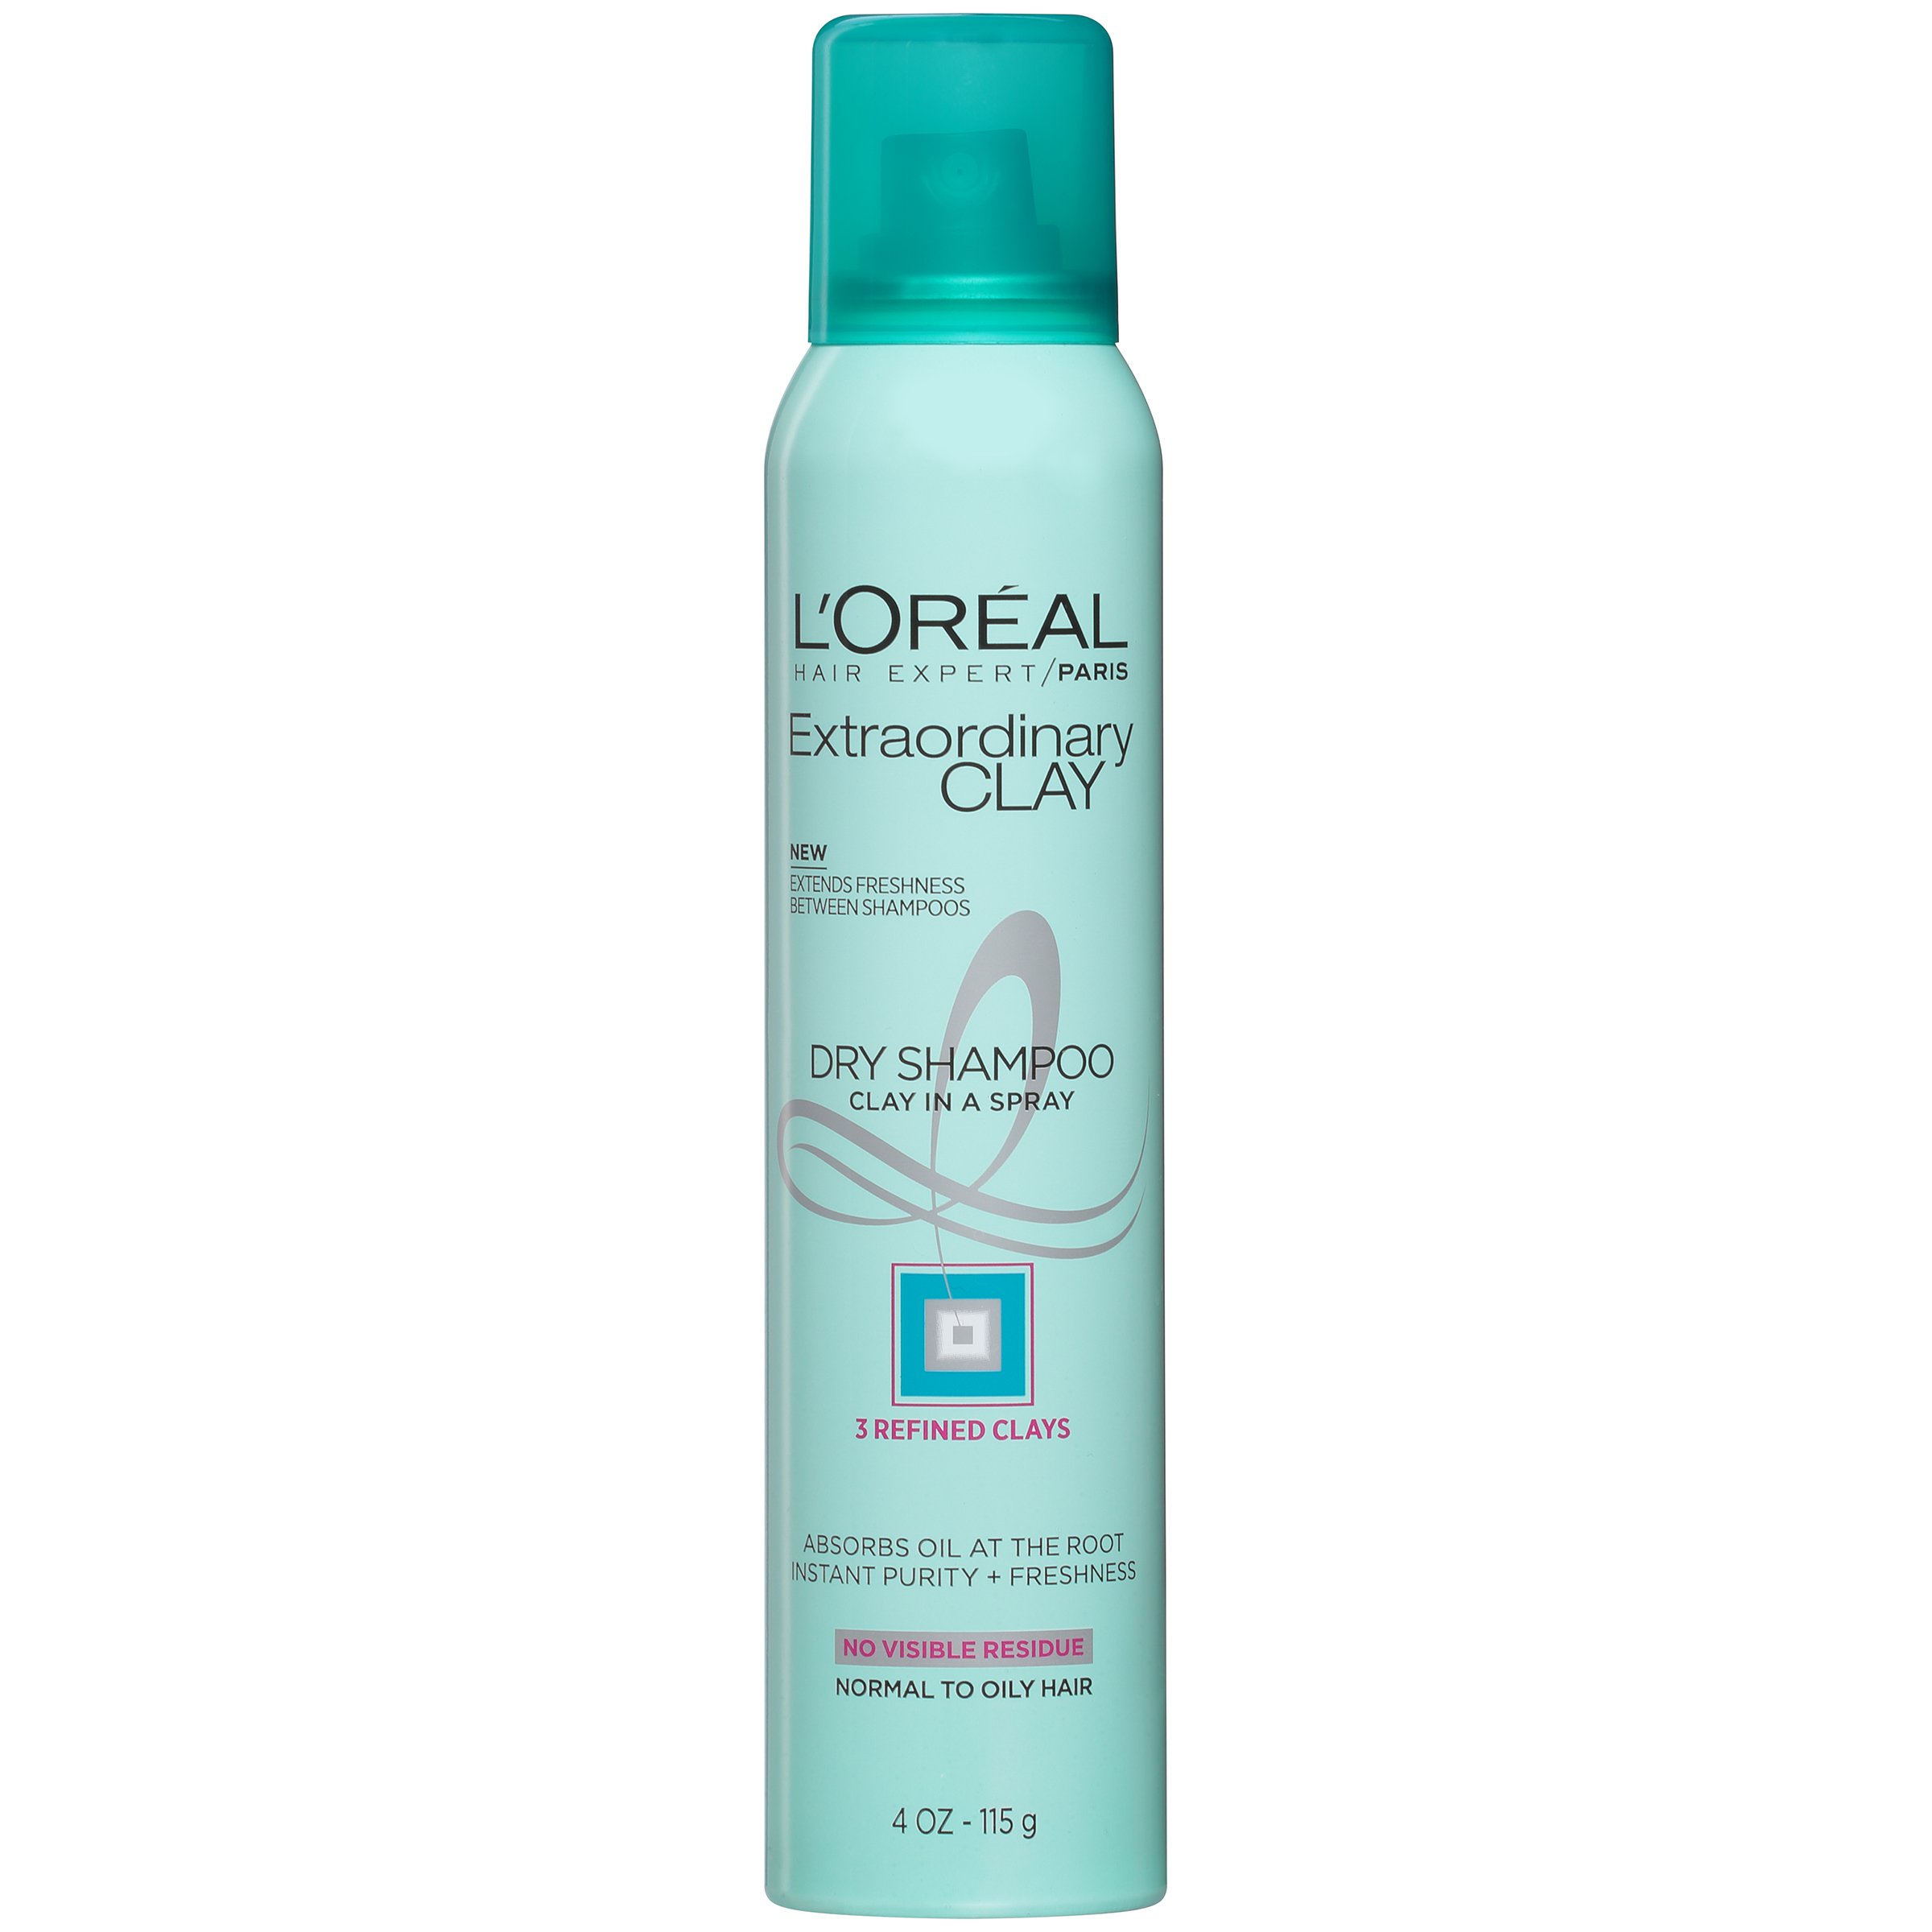 L'Oreal Paris Hair Expert Extraordinary Clay Dry Shampoo - & Conditioner at H-E-B